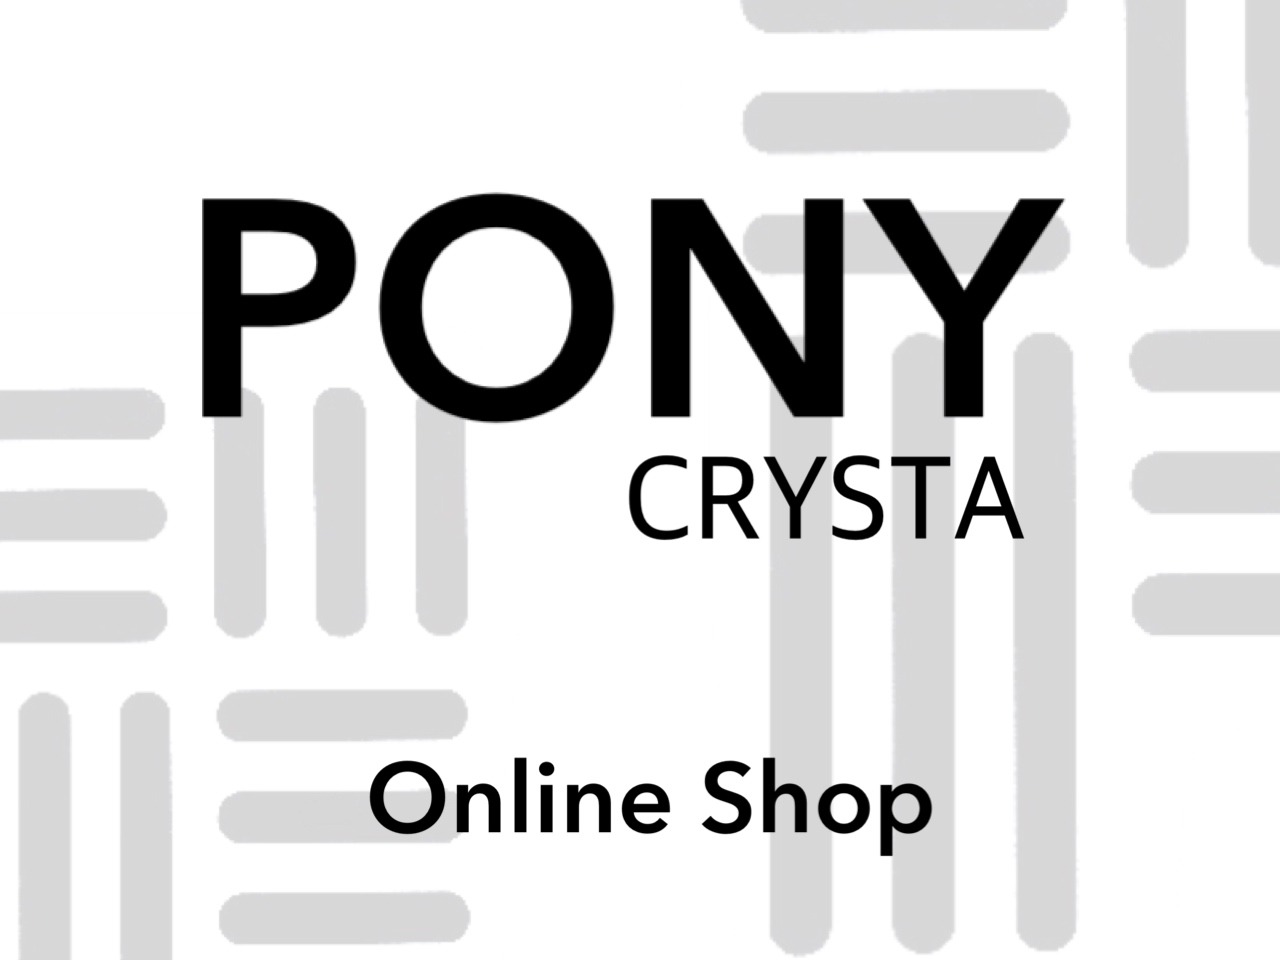 PONYcrysta_online